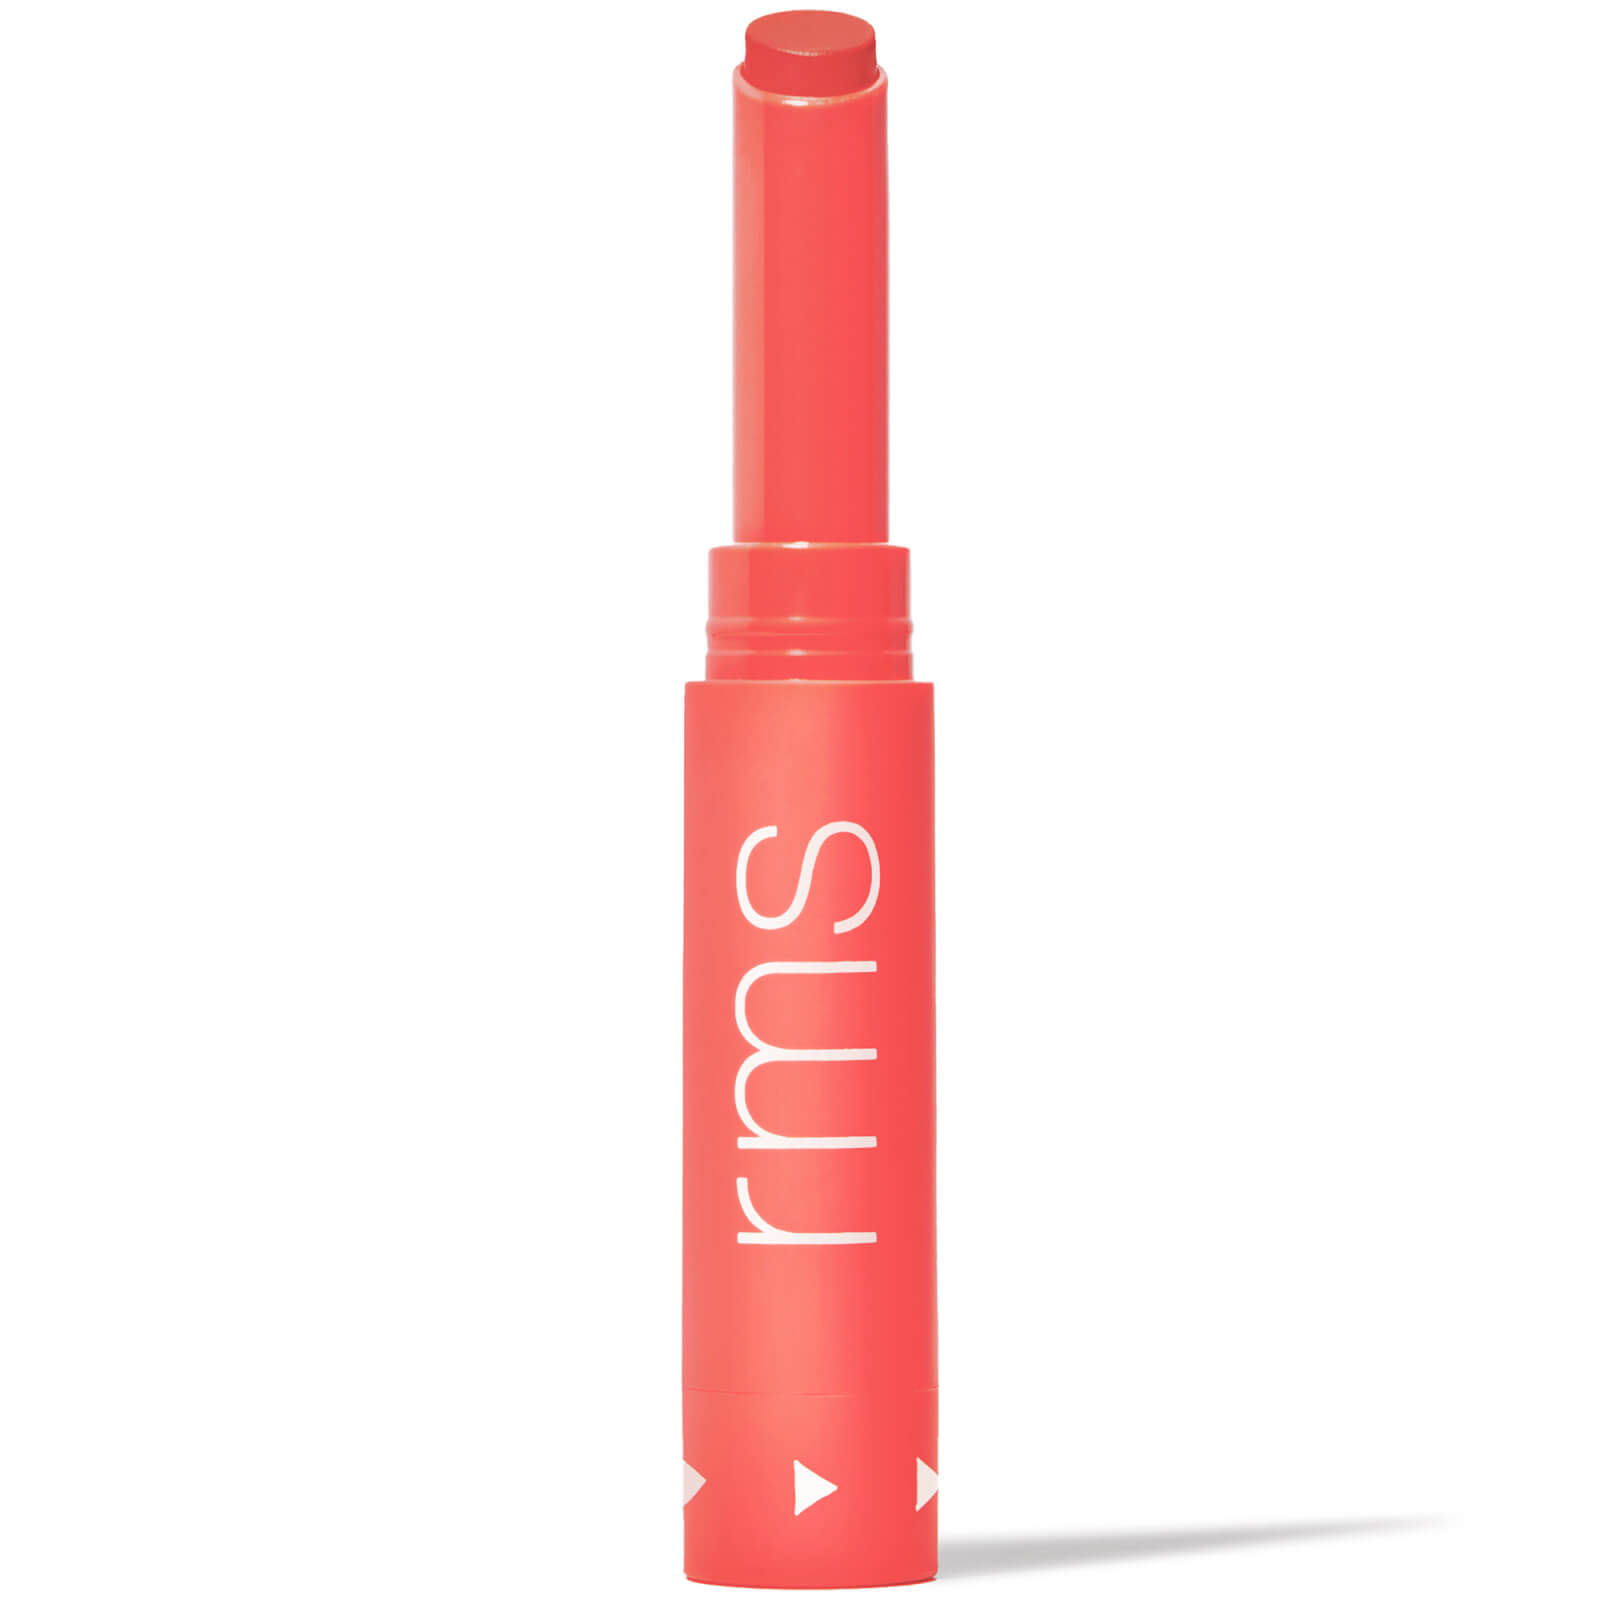 Rms Beauty Legendary Serum Lipstick 17g (various Shades) - Ruby Moon In Monica